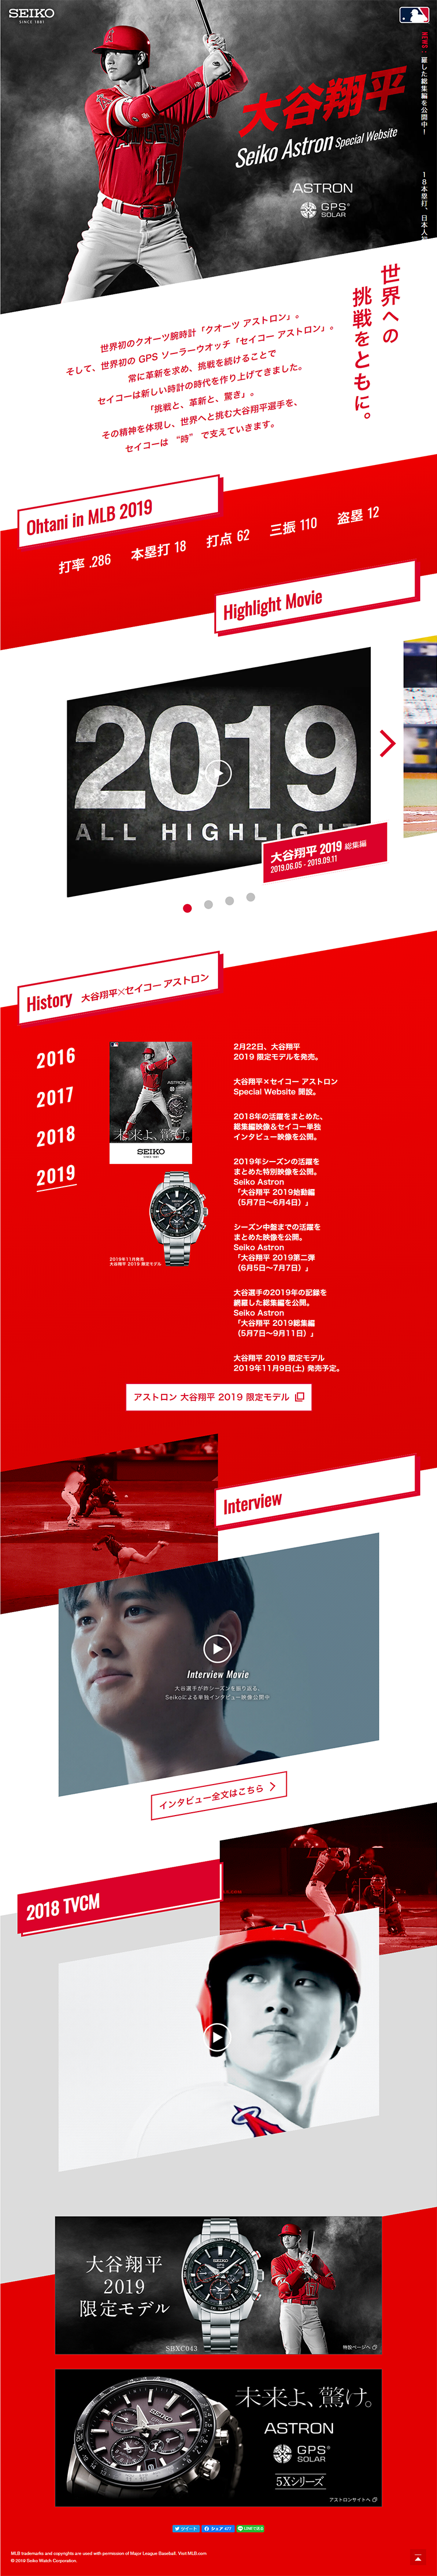 大谷翔平 Seiko Astron Special Website_pc_1